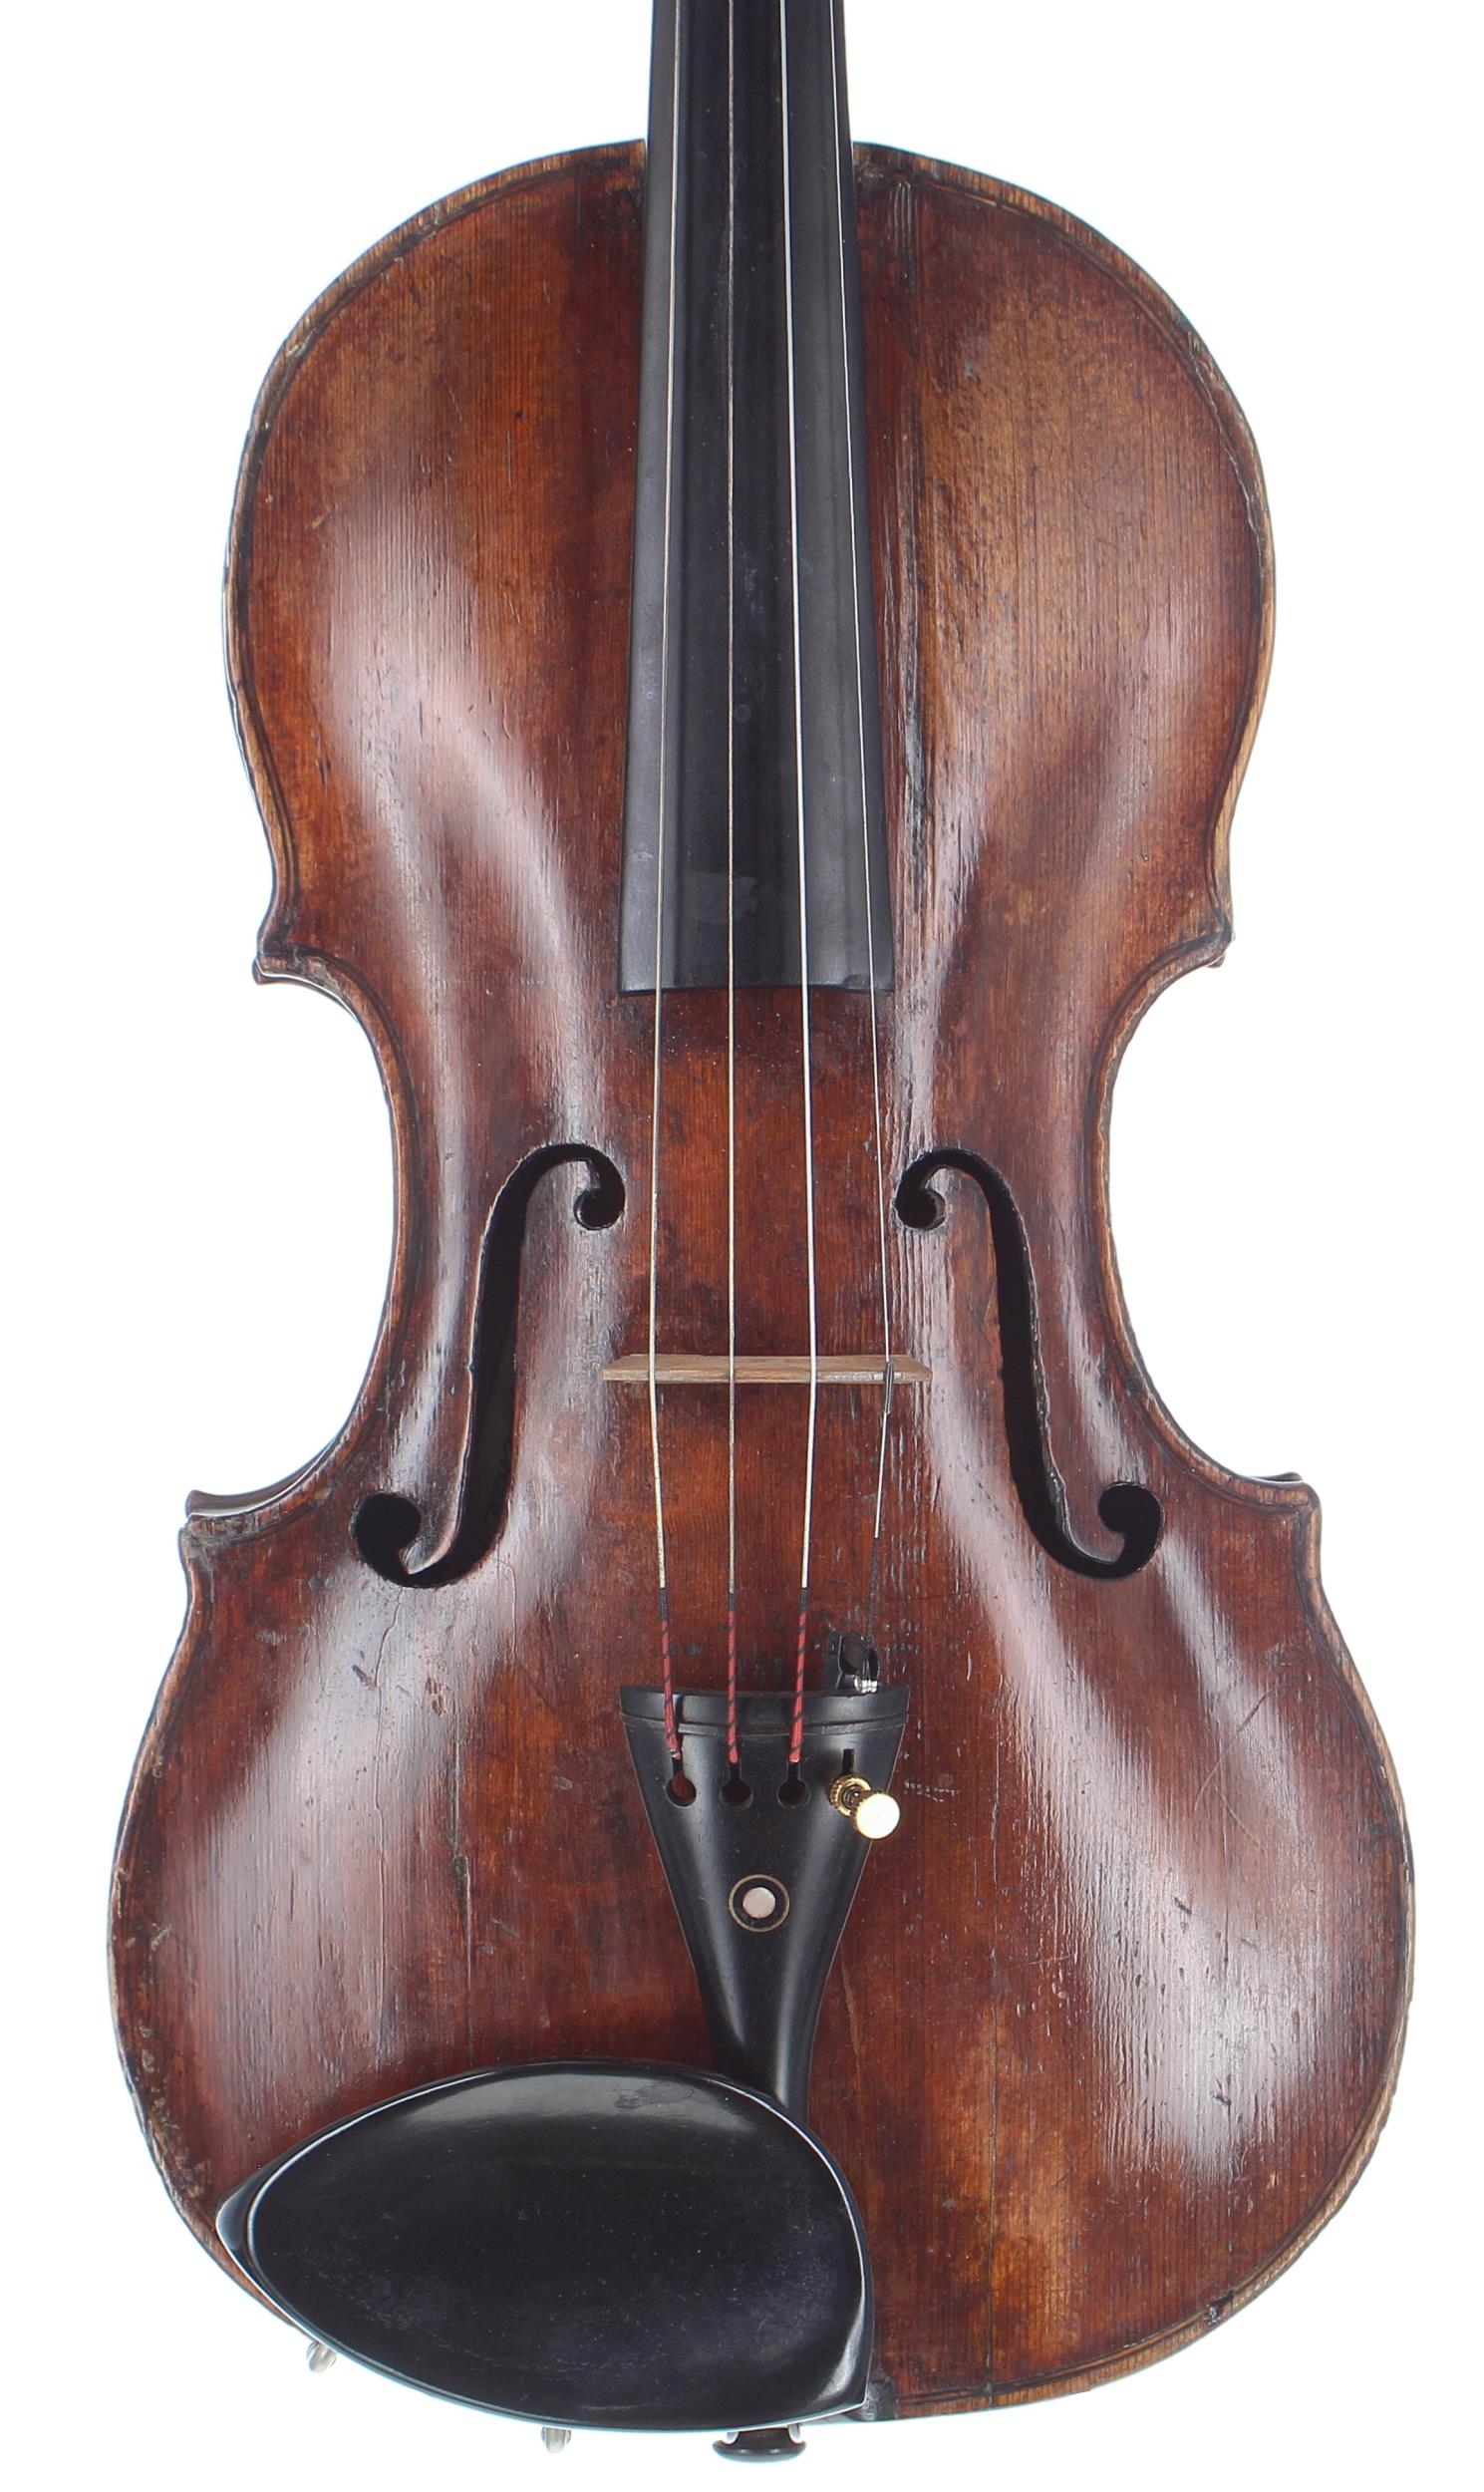 Interesting violin labelled Geo Batista Gabbriella fece in Firenze 1750; also stamped G.B.G.